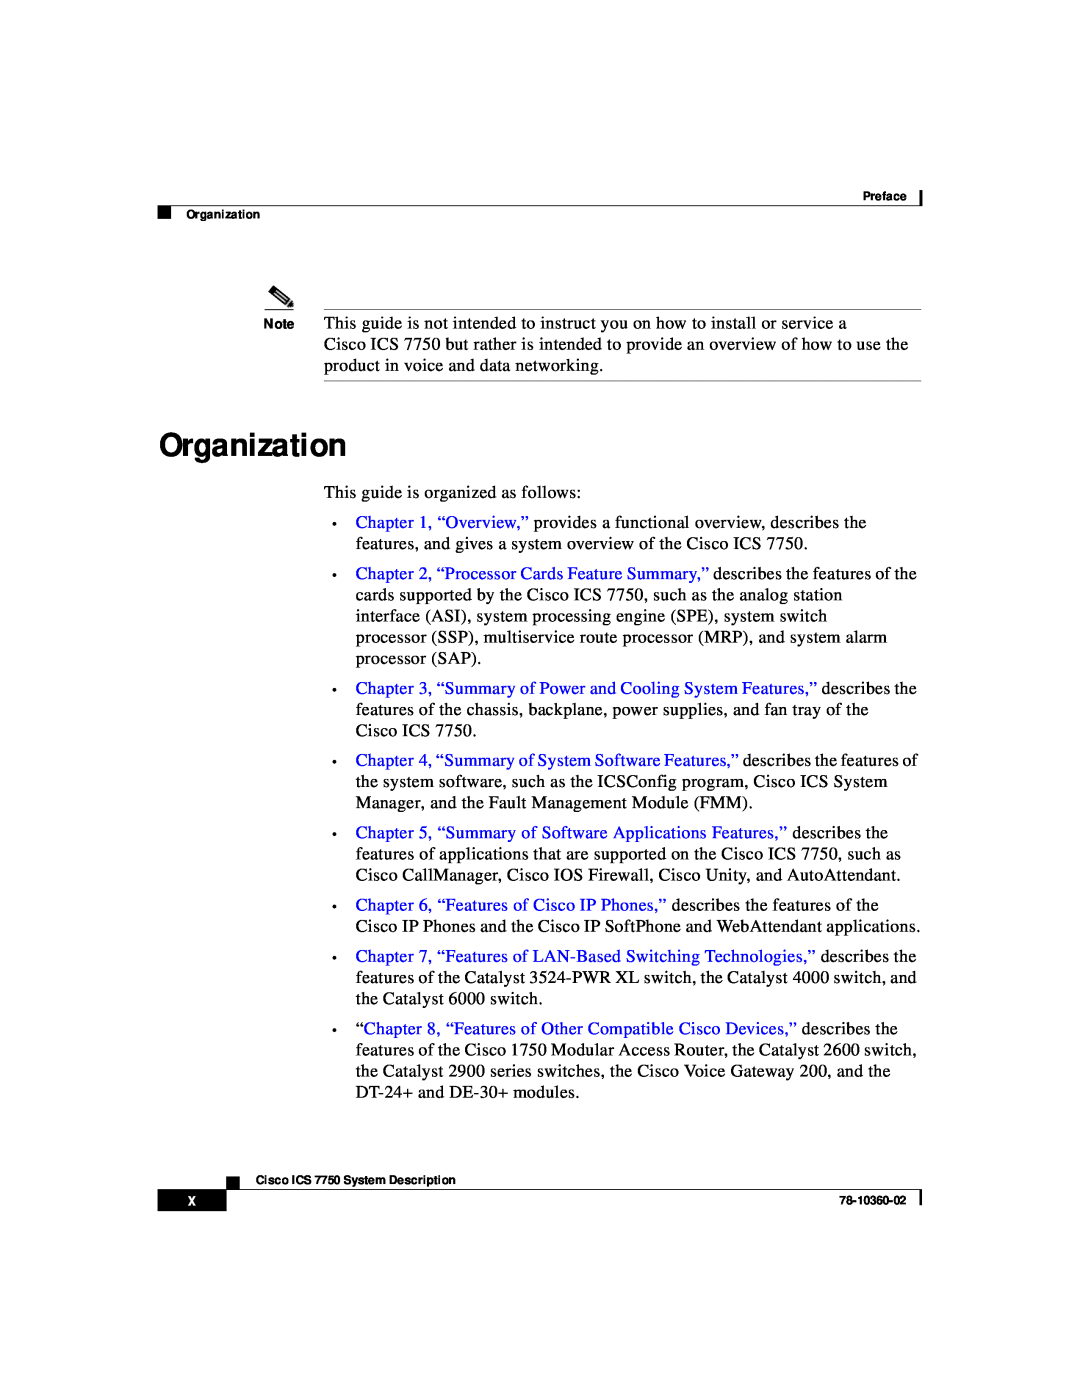 Cisco Systems ICS-7750 manual Organization 